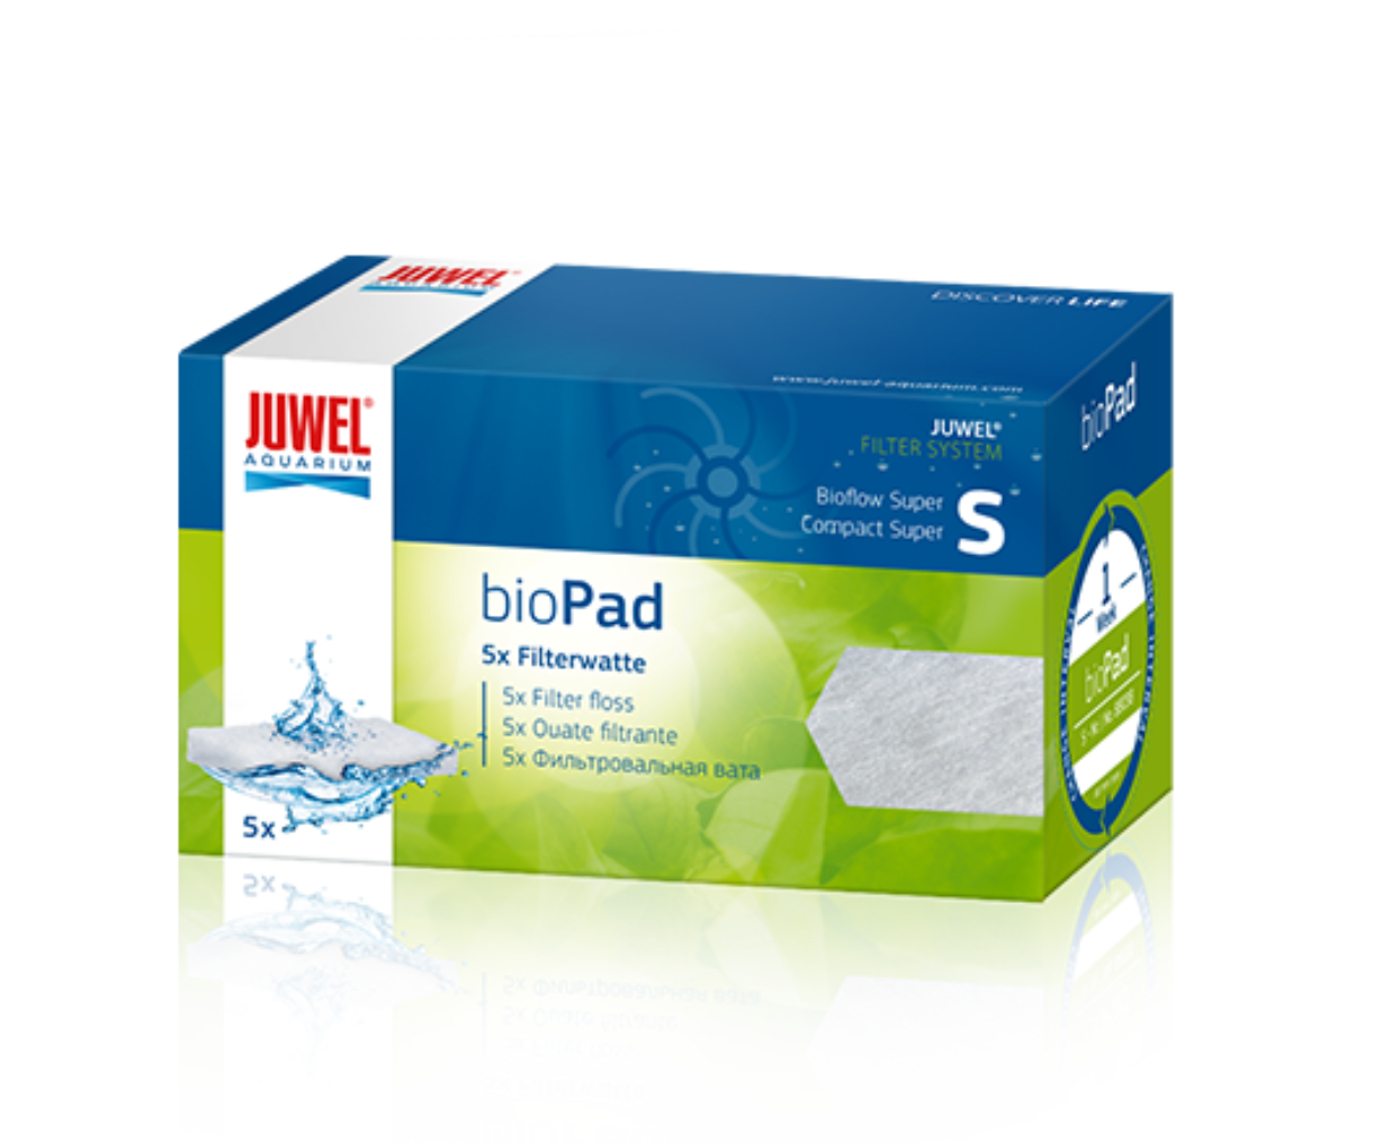 Juwel BioPad S Filterwatte Bioflow Super-Compact Super